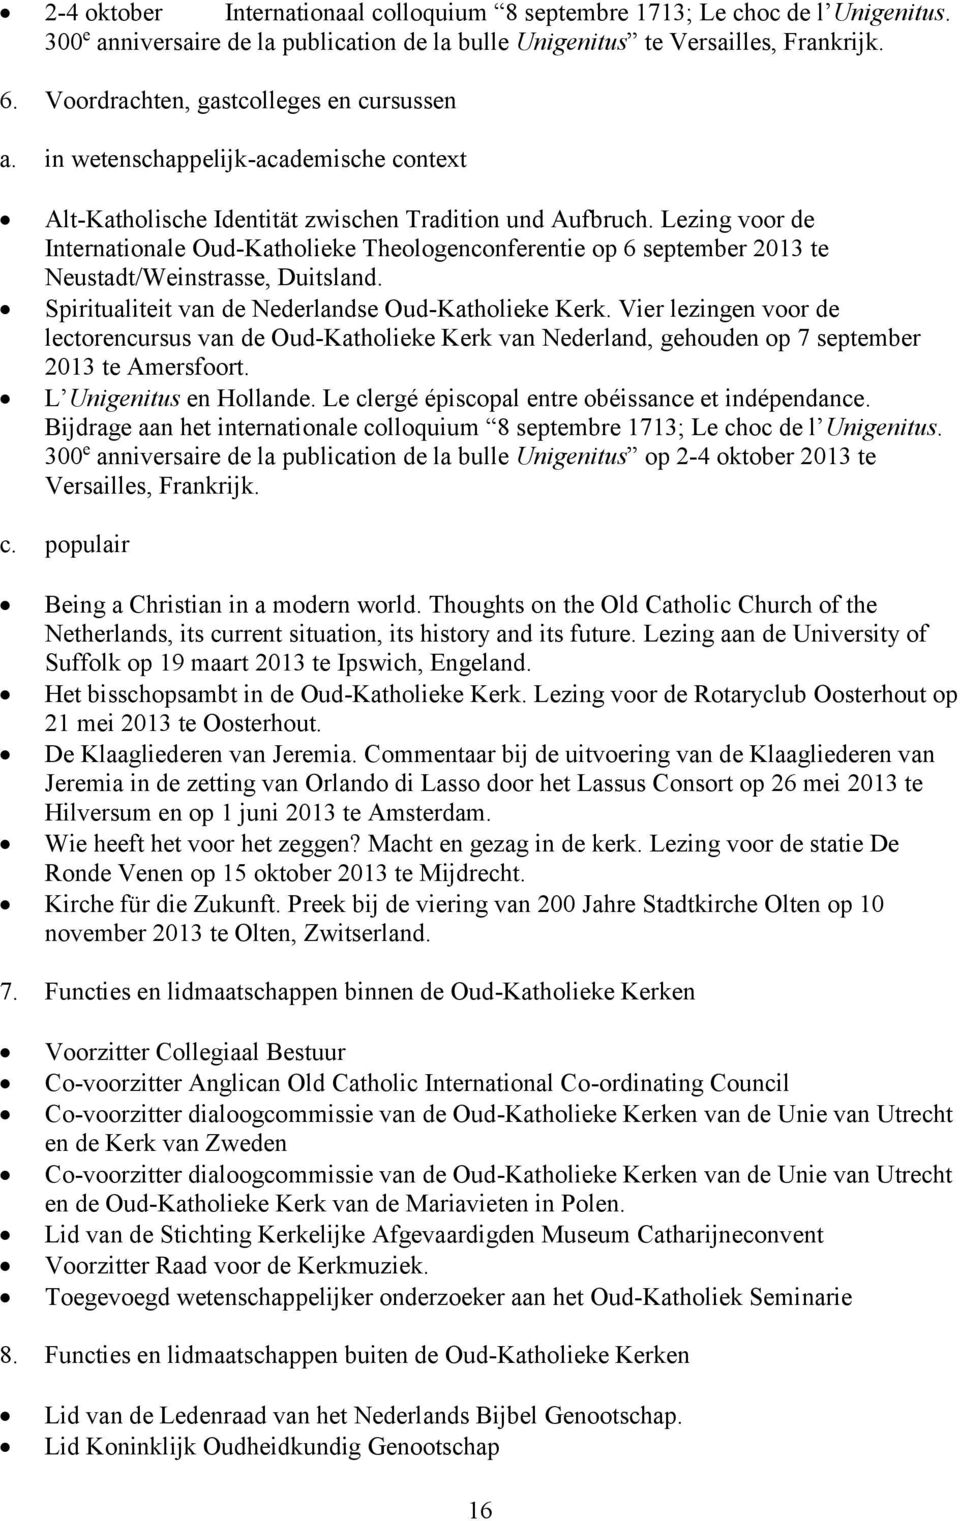 Lezing voor de Internationale Oud-Katholieke Theologenconferentie op 6 september 2013 te Neustadt/Weinstrasse, Duitsland. Spiritualiteit van de Nederlandse Oud-Katholieke Kerk.